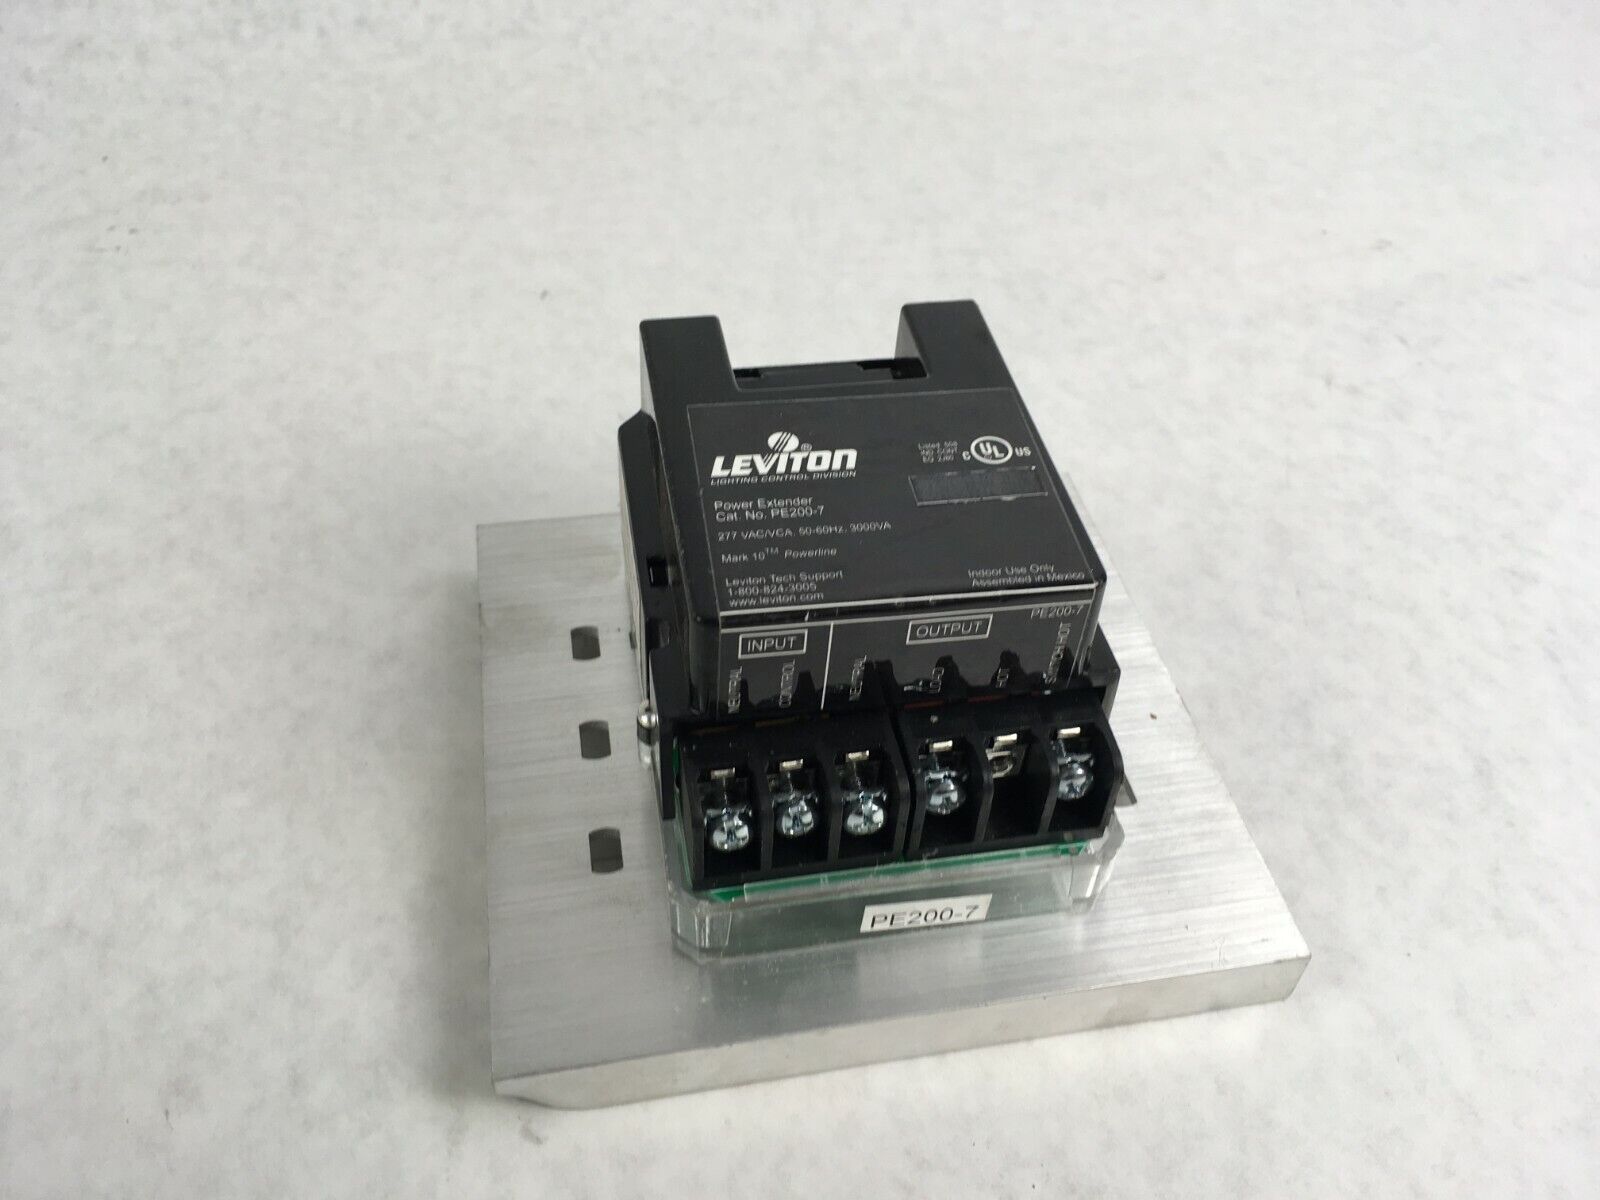 Leviton PE200-7 Power Extender